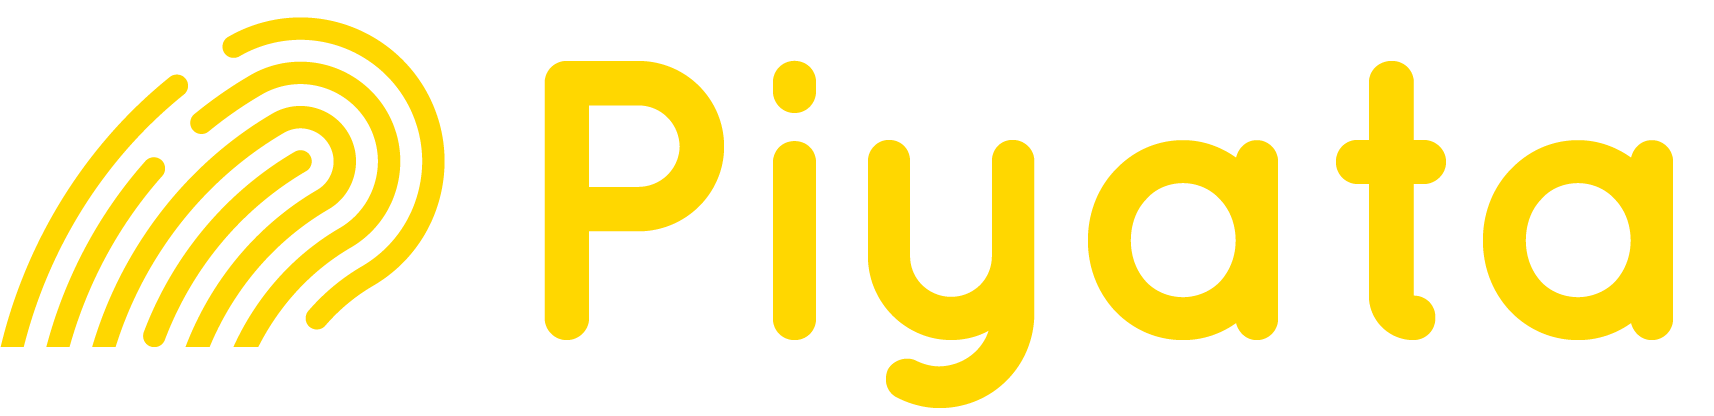 Piyata's logo